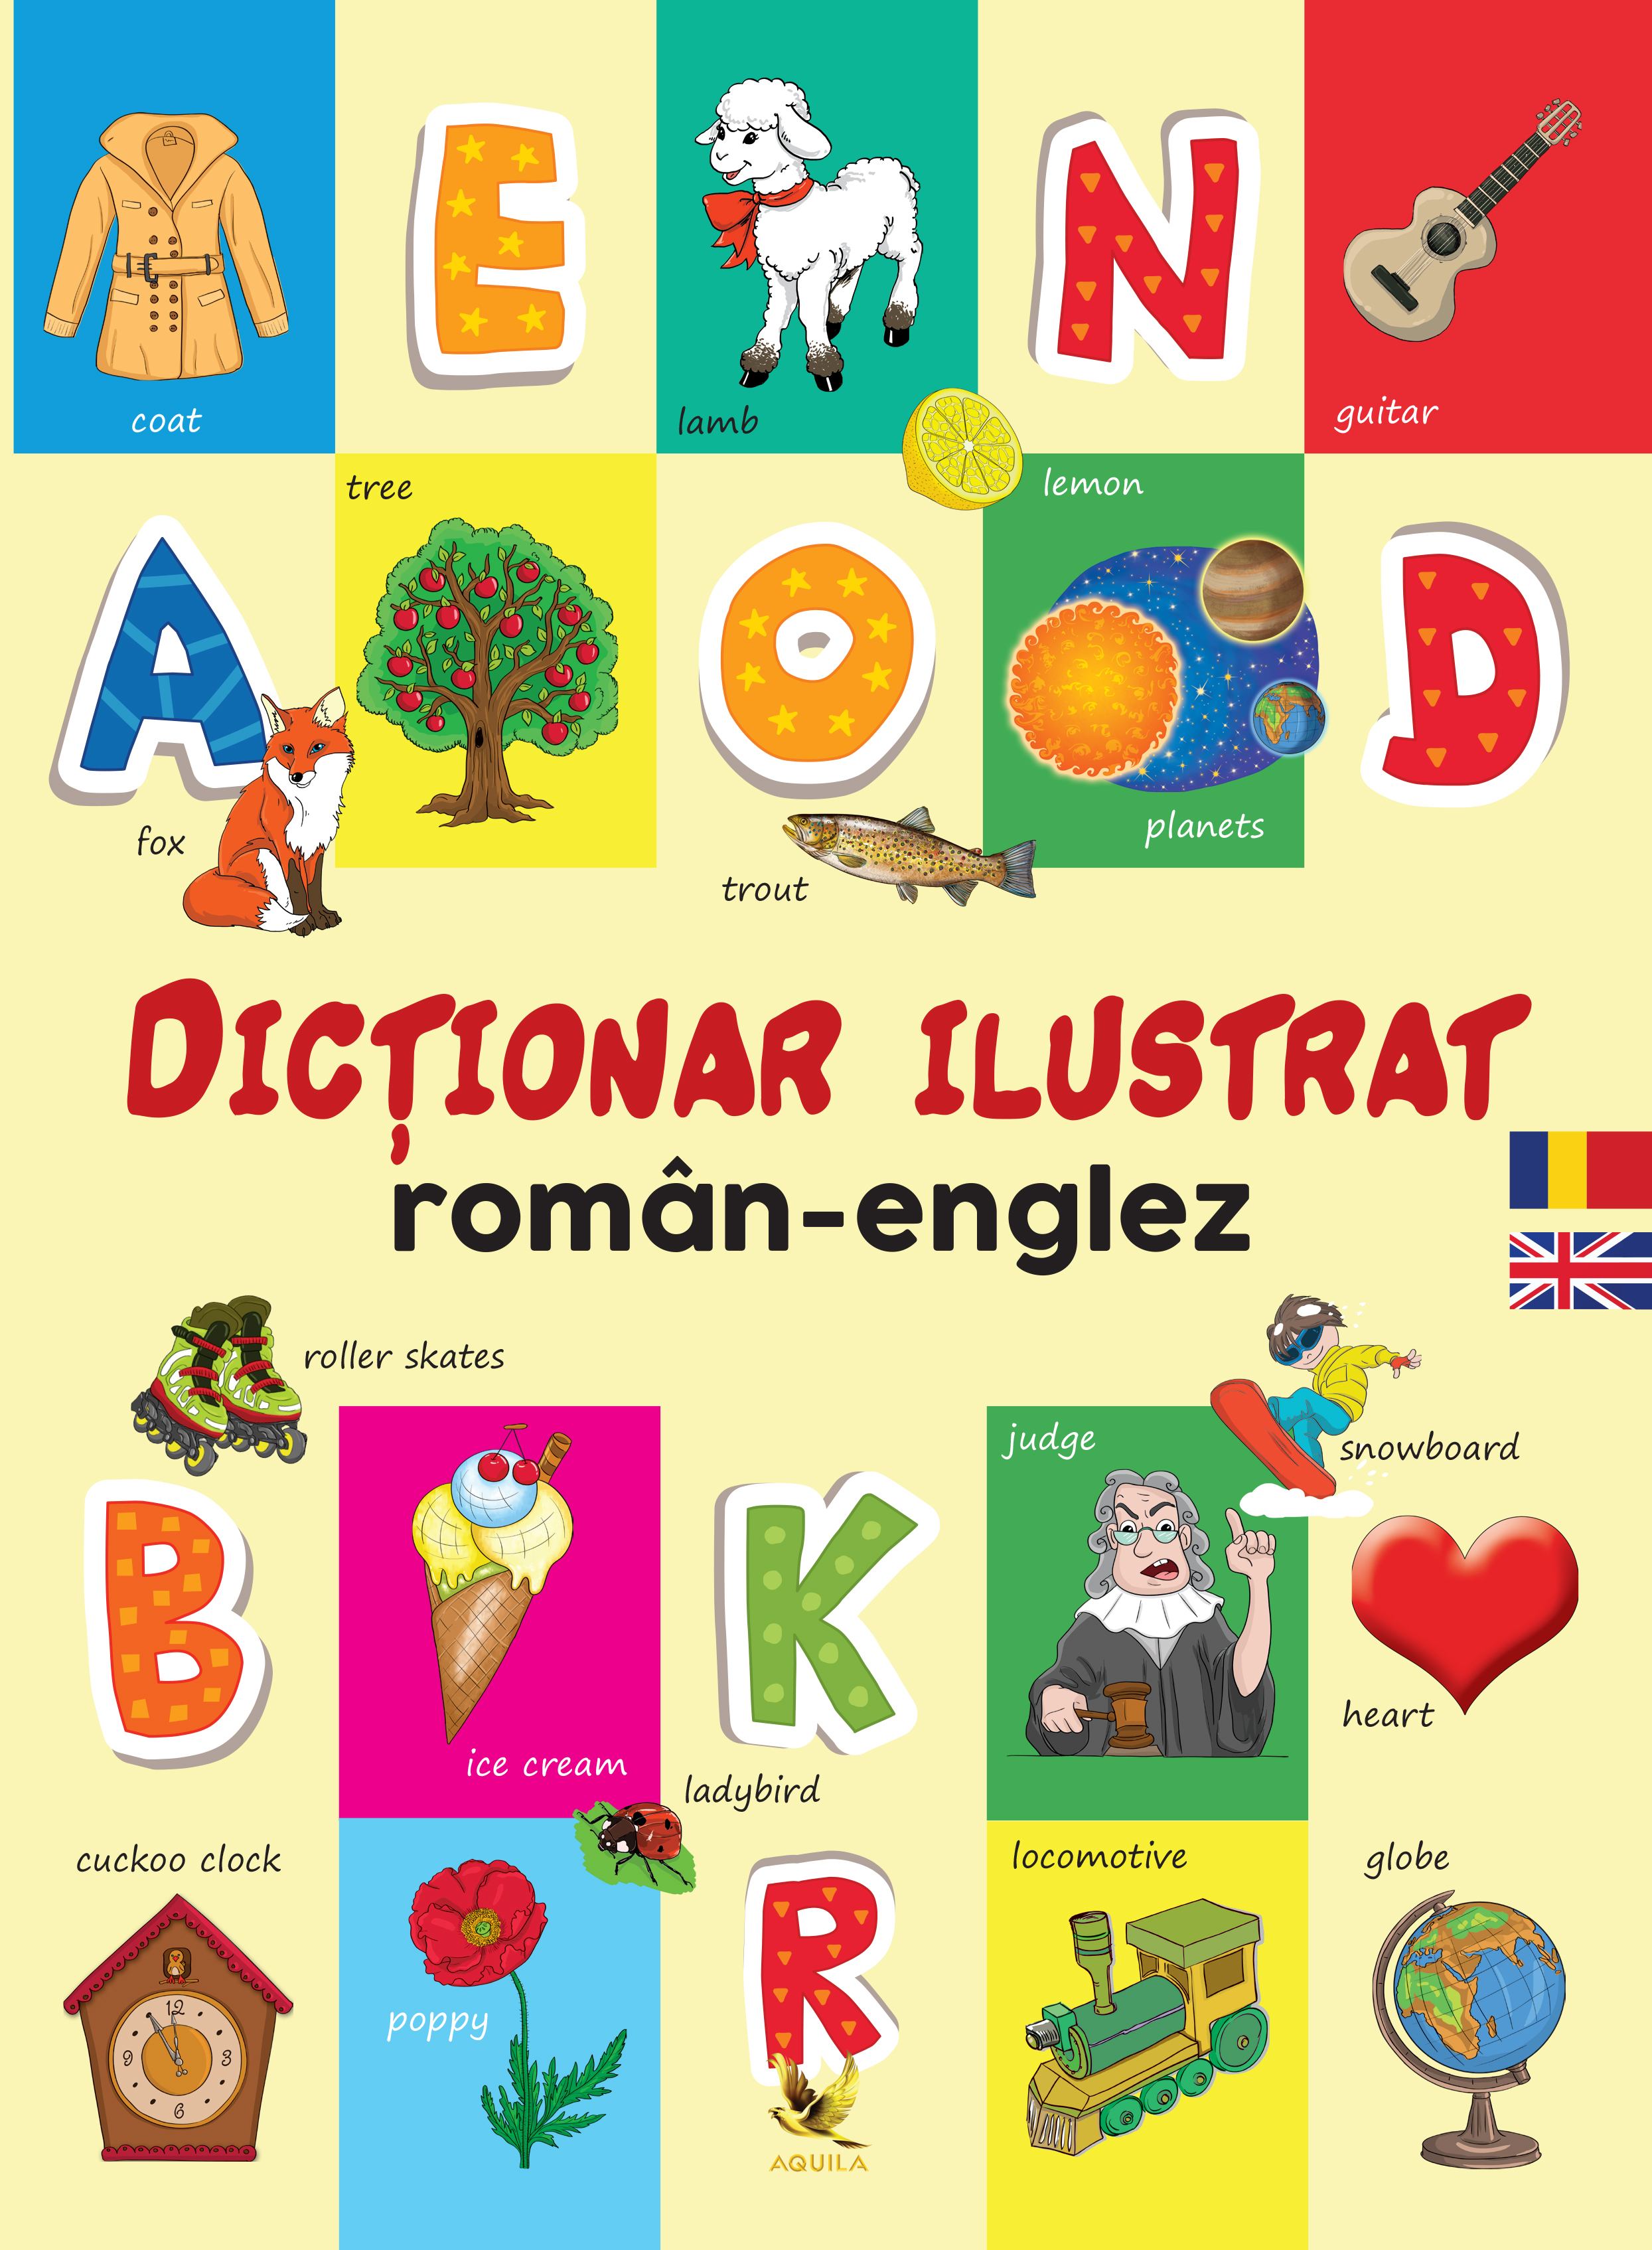 Dictionar ilustrat roman-englez - Primele mele 1000 de cuvinte in limba engleza